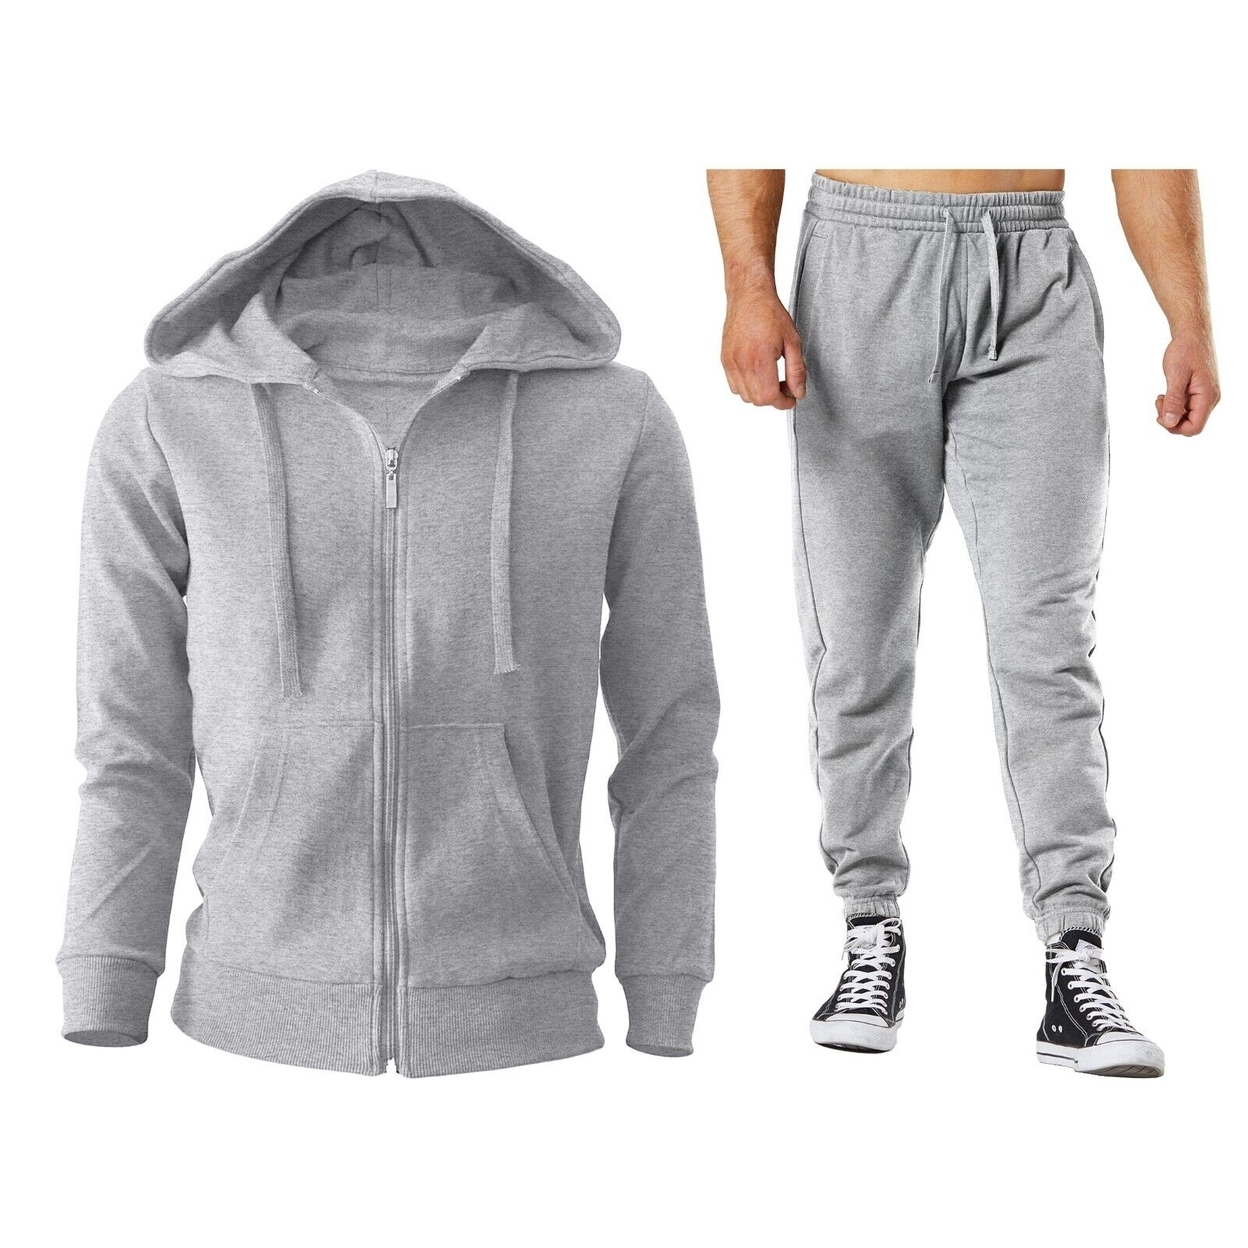 2-Piece: Men's Winter Warm Cozy Athletic Multi-Pockets BIG & TALL Sweatsuit Set - Grey, Large